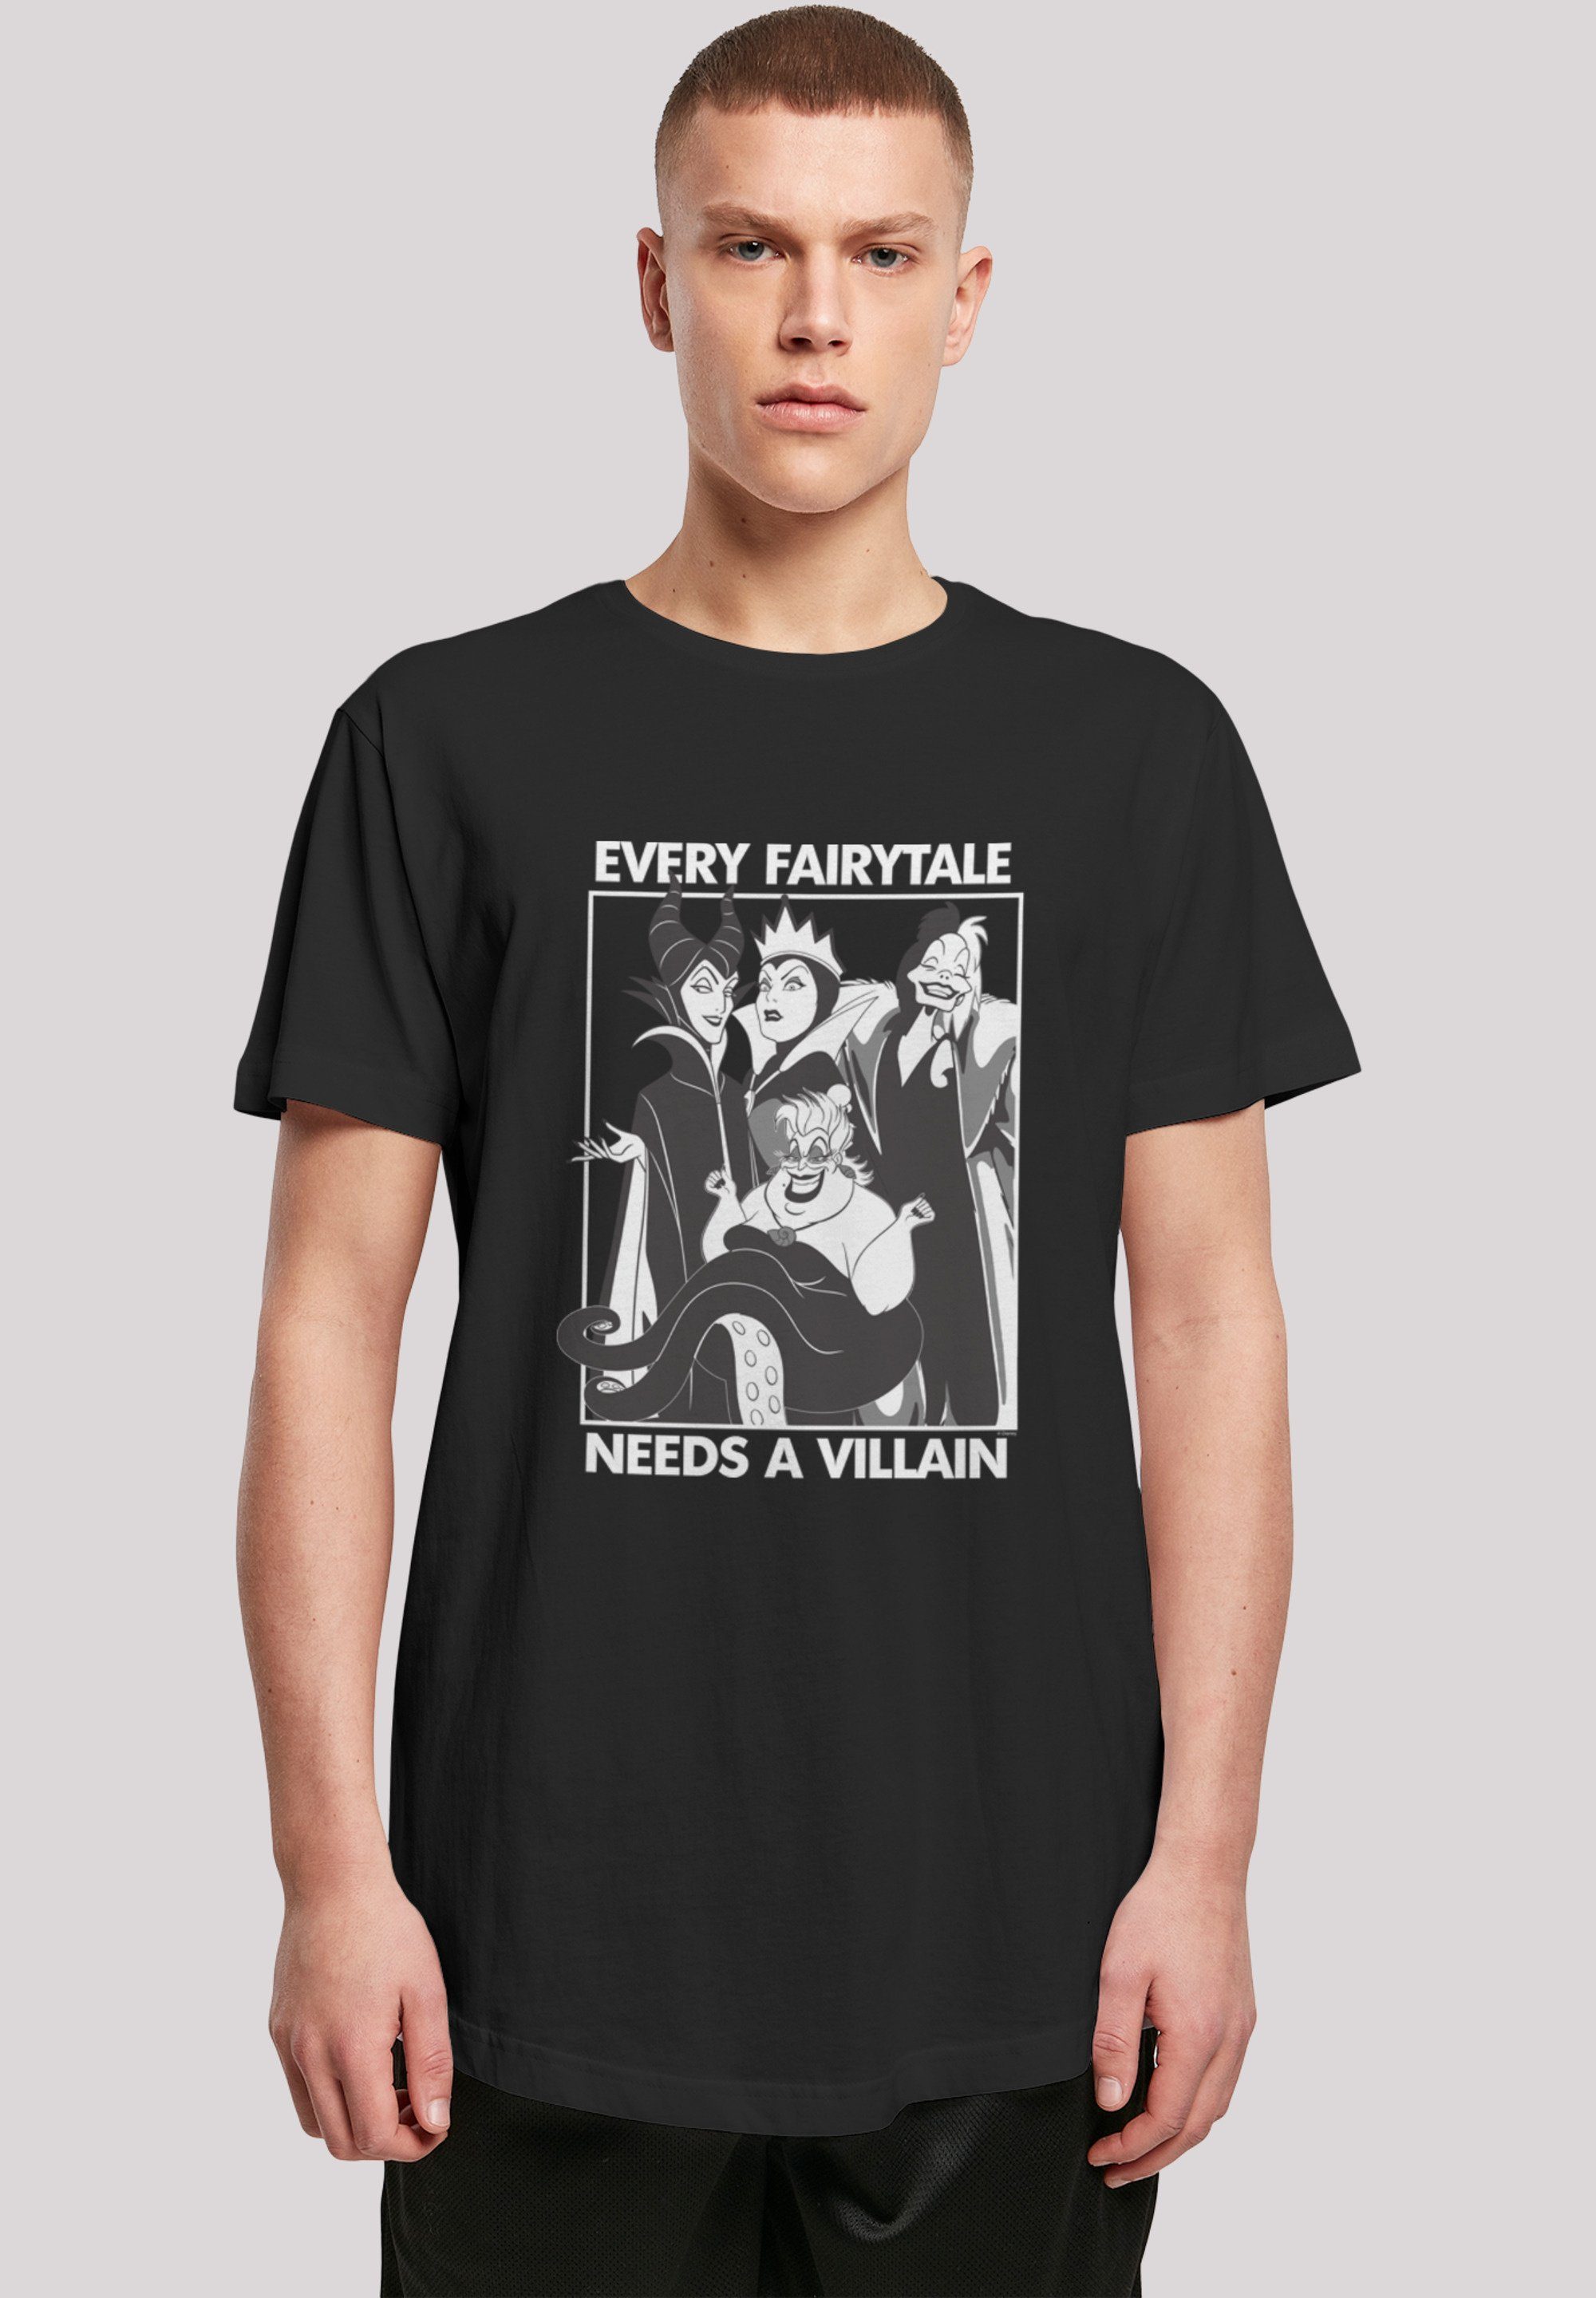 Tale Fairy T-Shirt Every Needs A Print F4NT4STIC Villain'